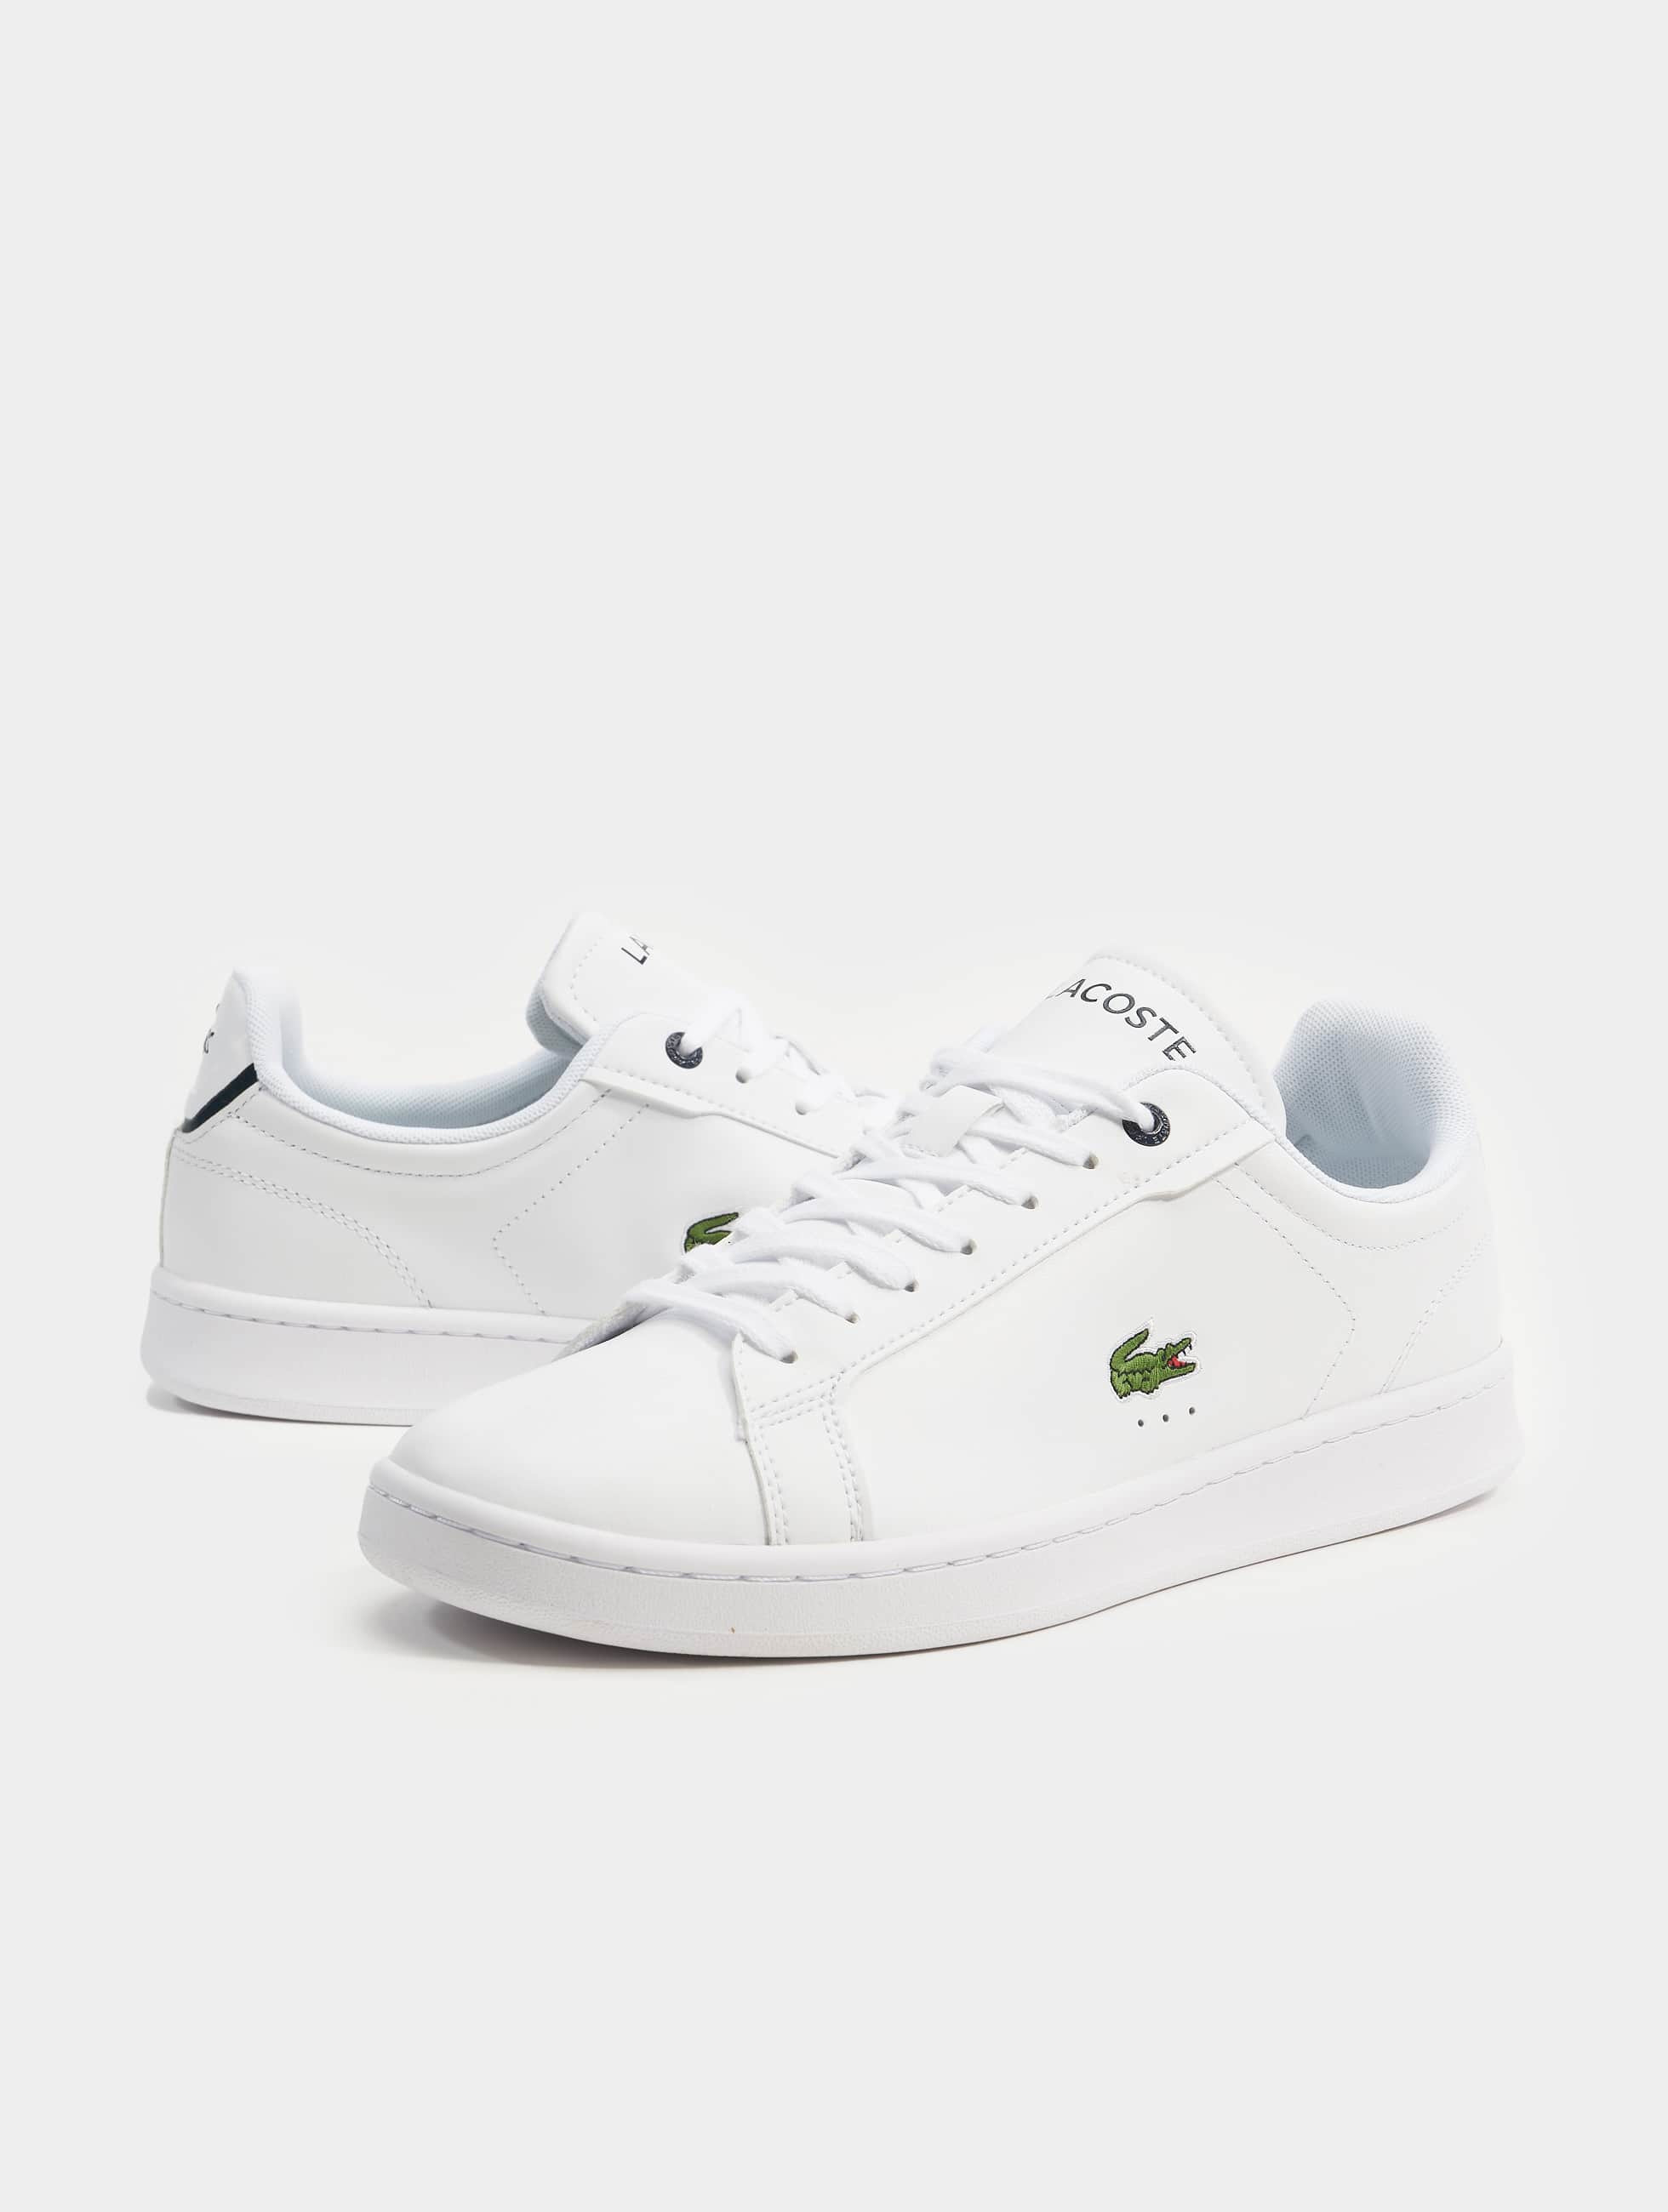 Lacoste Sko / Sneakers Carnaby Pro Bl23 1 SMA hvid 982229